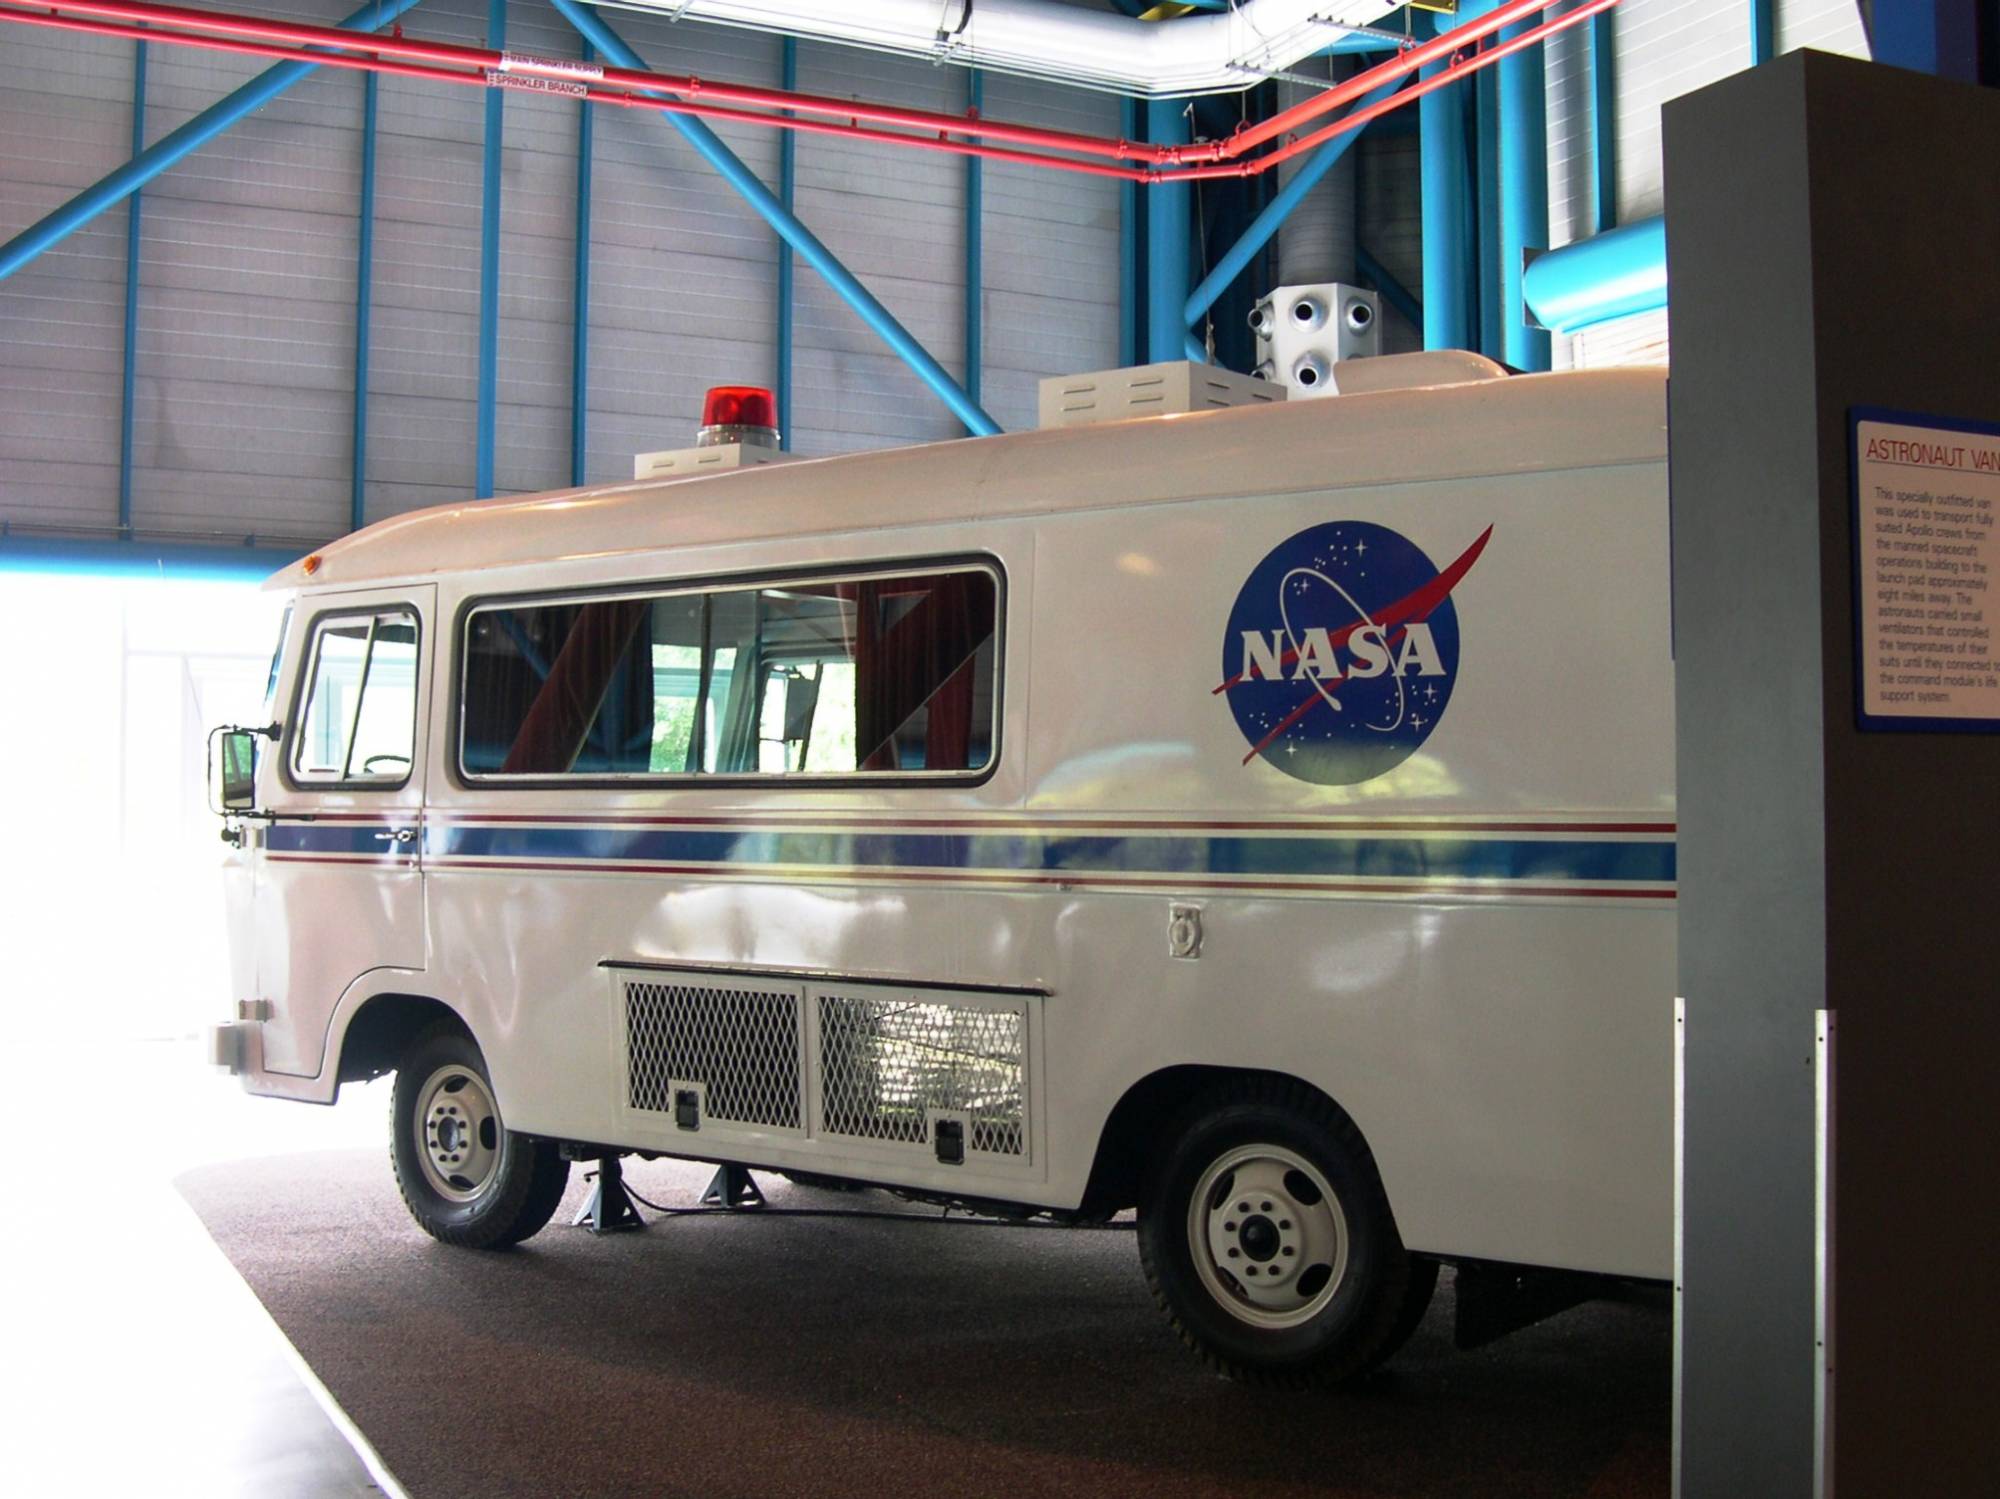 KSC - Astronaut Van at Apllo Saturn V Center